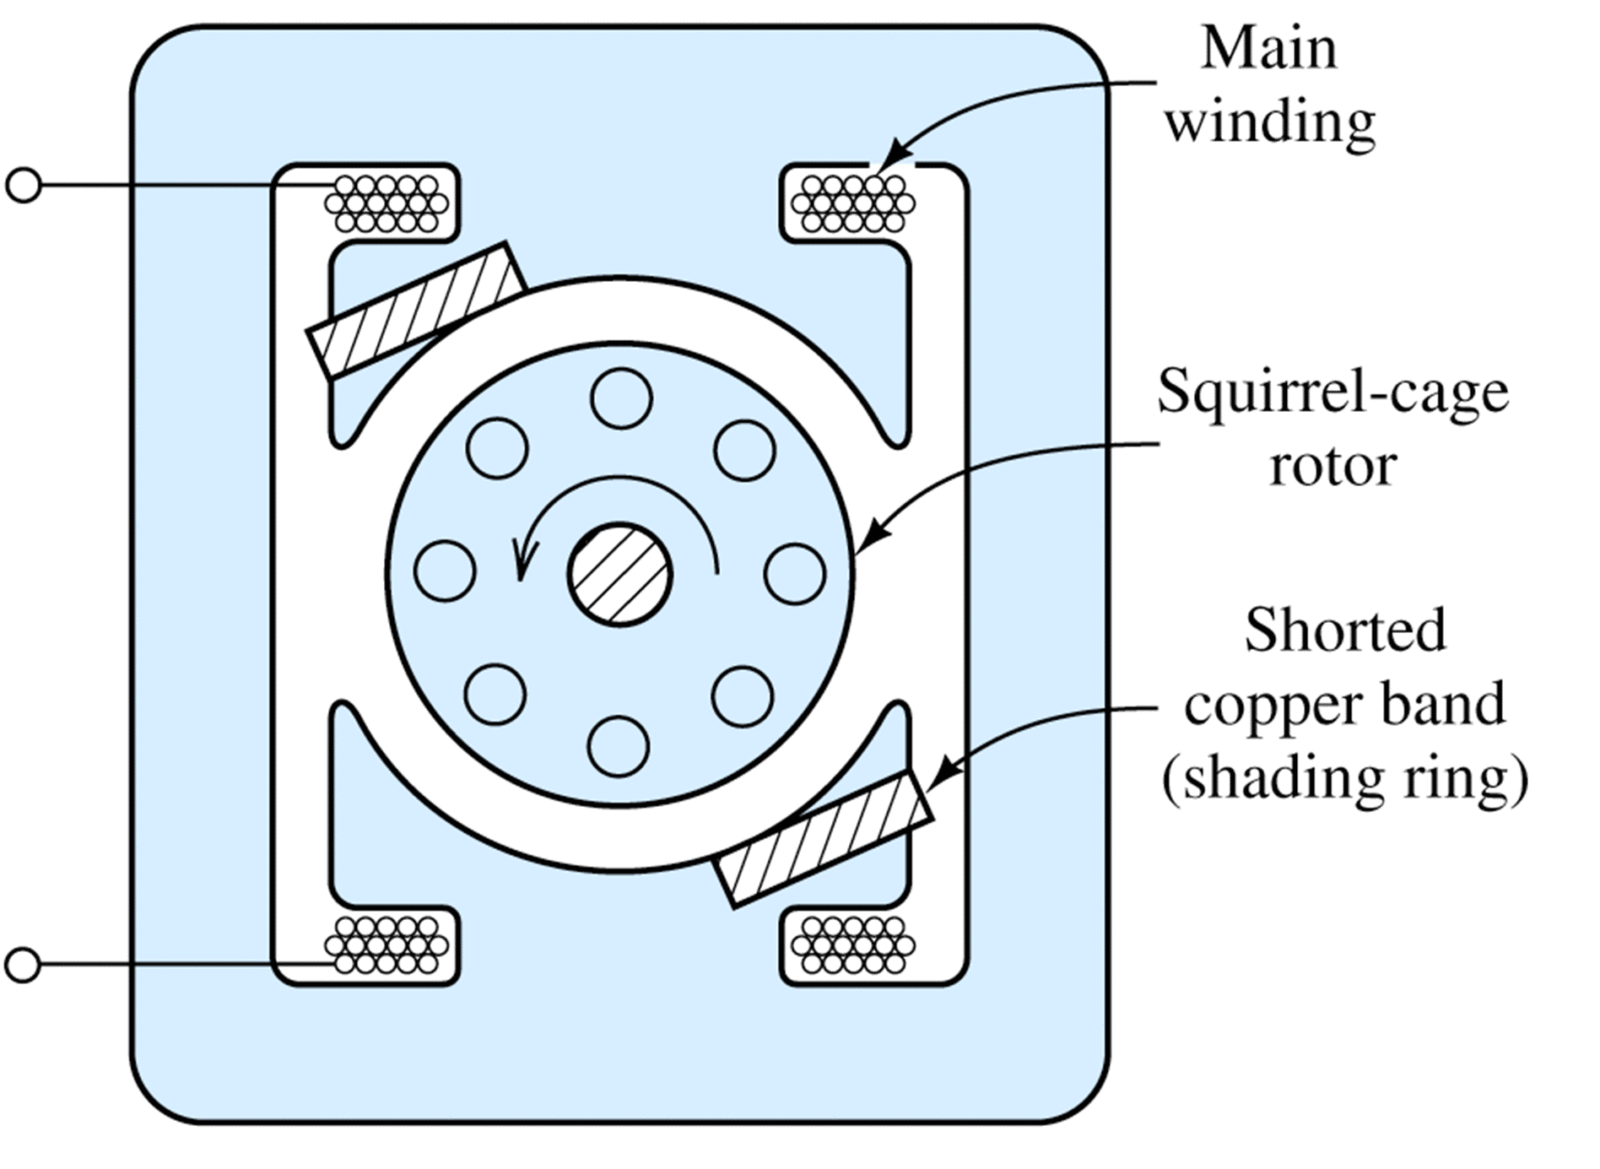 shaded pole motor wiring diagram